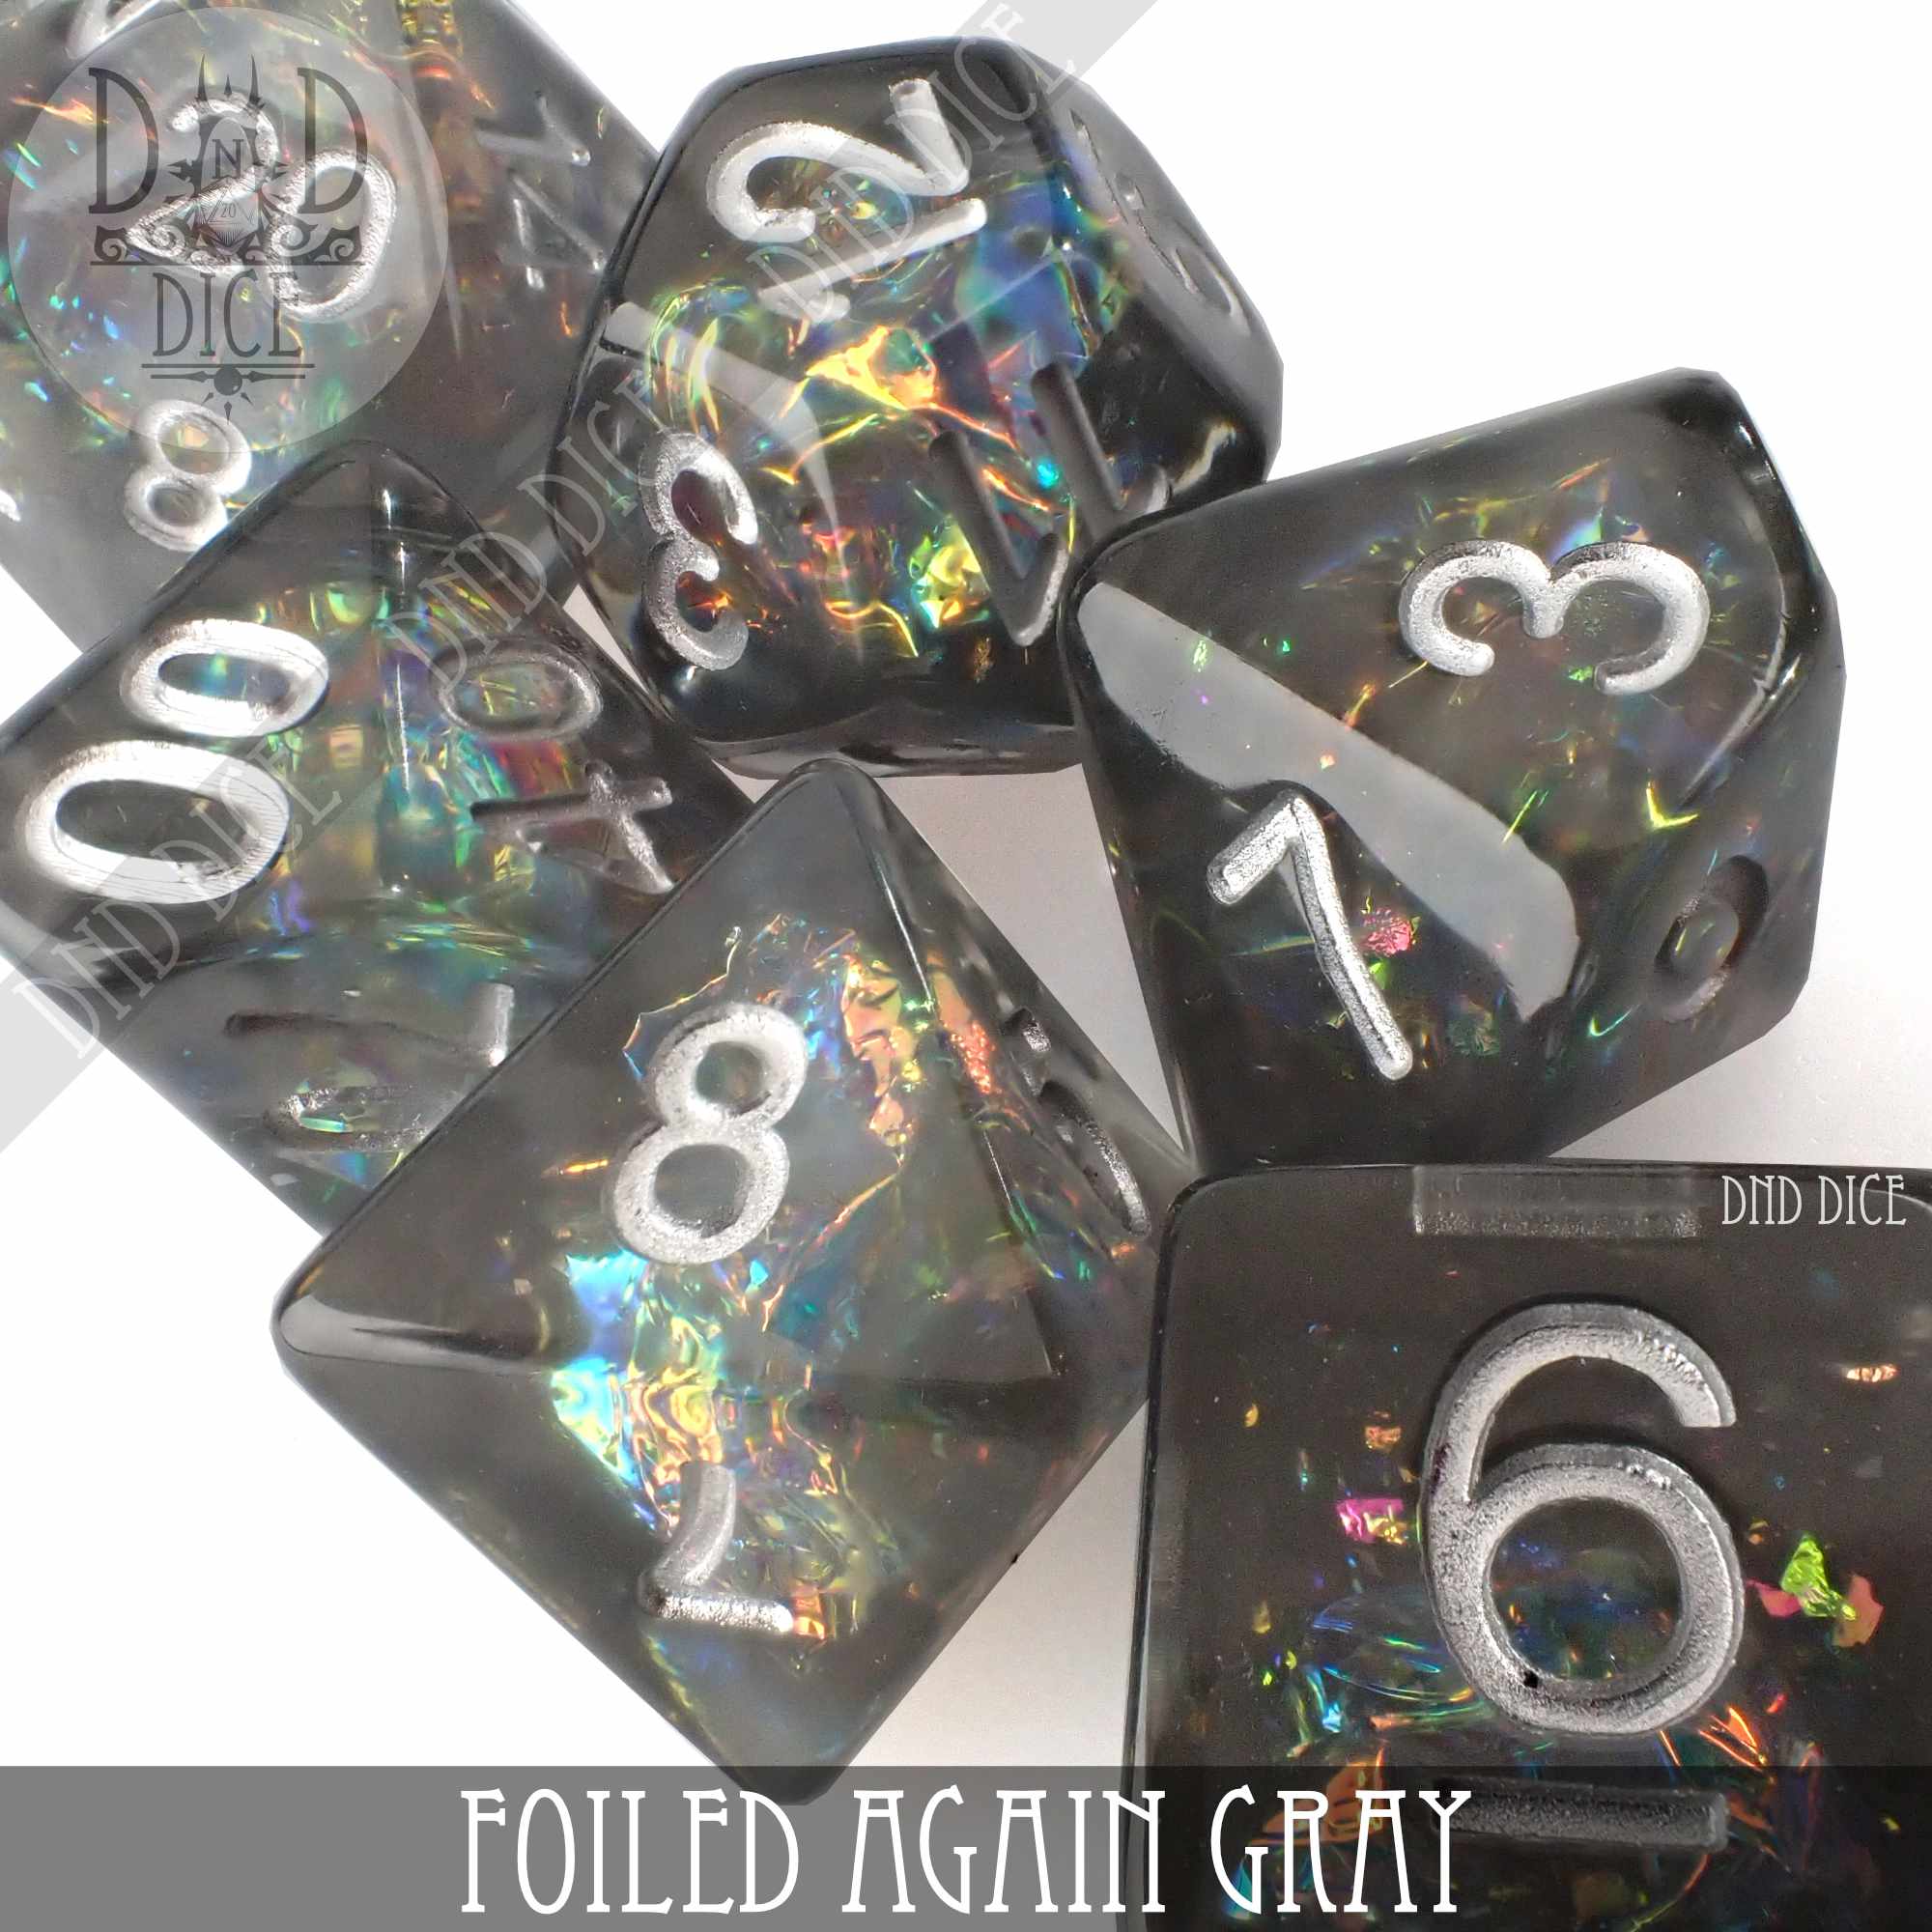 Foiled Again Gray